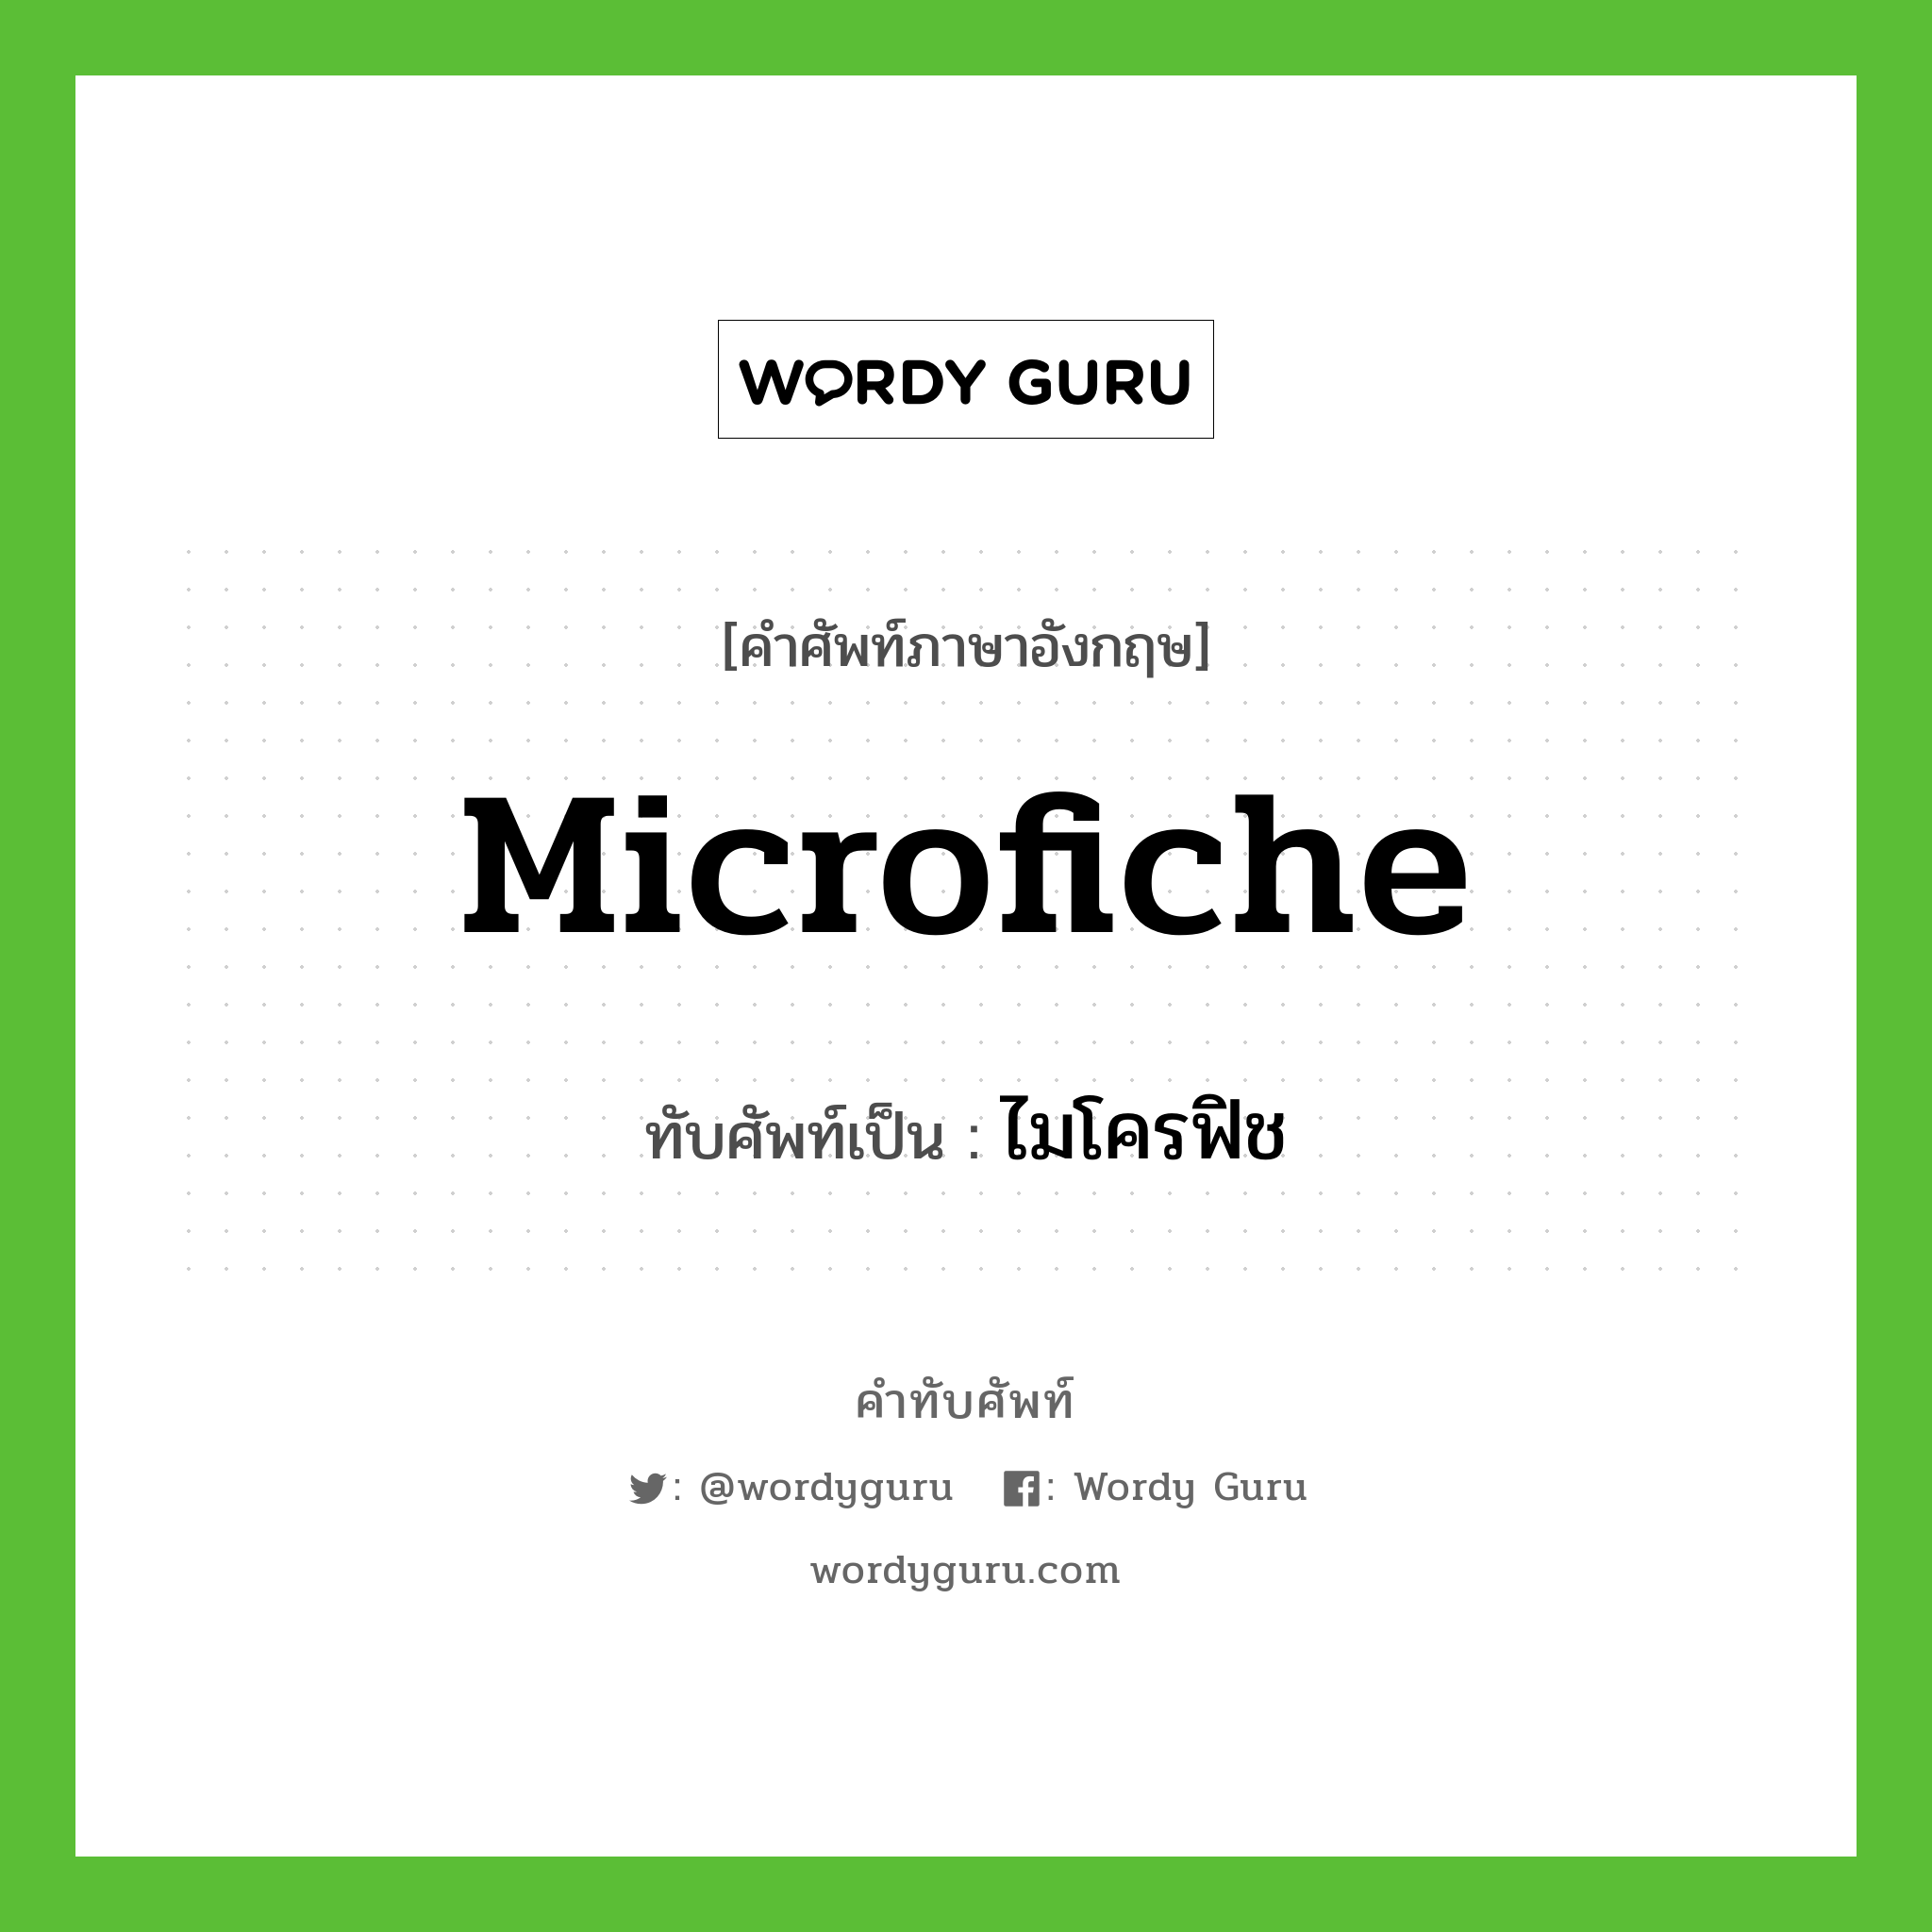 microfiche เขียนเป็นคำไทยว่าอะไร?, คำศัพท์ภาษาอังกฤษ microfiche ทับศัพท์เป็น ไมโครฟิช